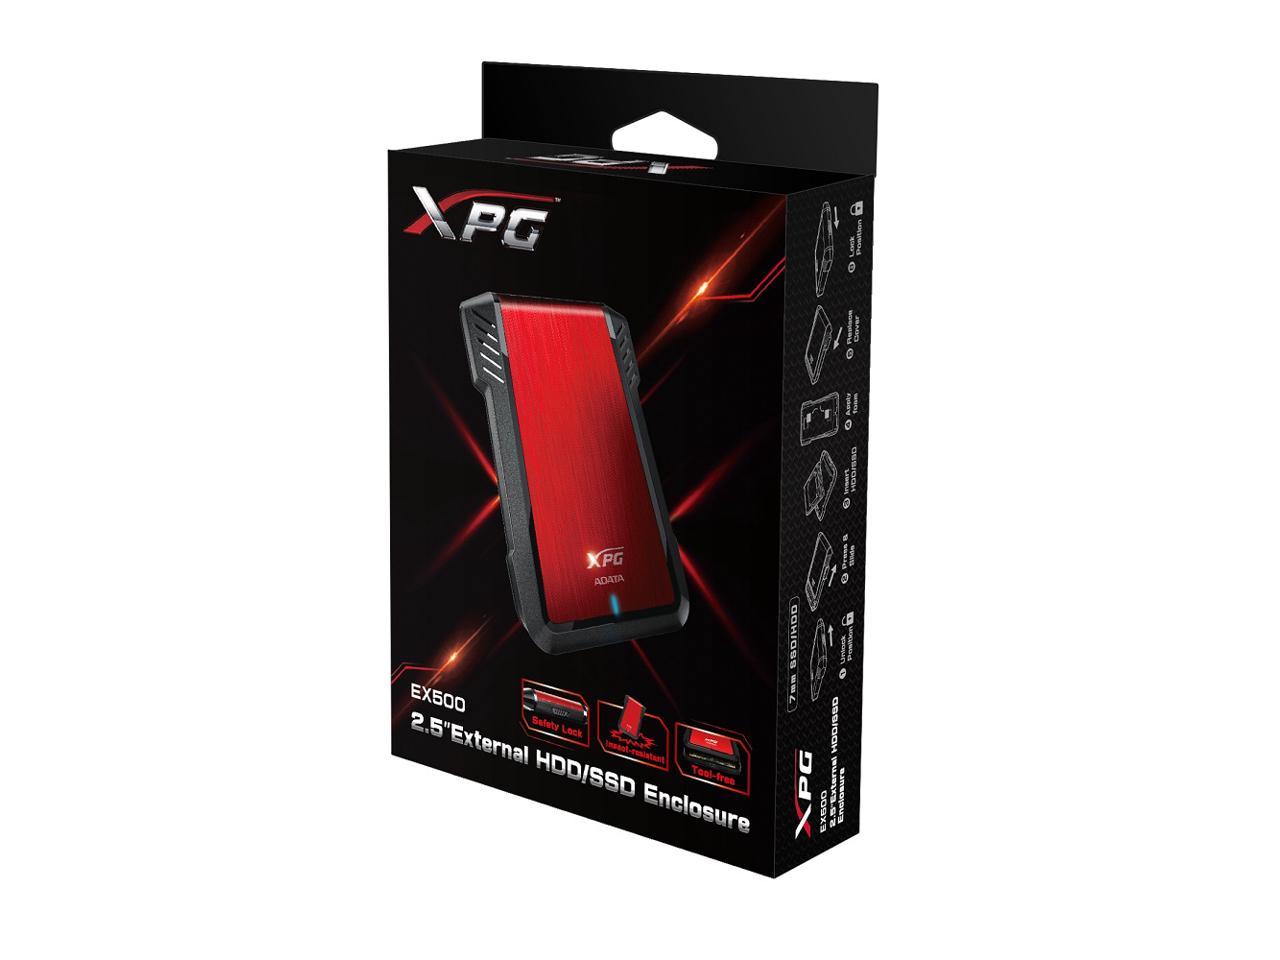 ADATA XPG EX500 - Storage enclosure - 2.5" - SATA 6Gb/s - 600 MBps - USB 3.1 - red